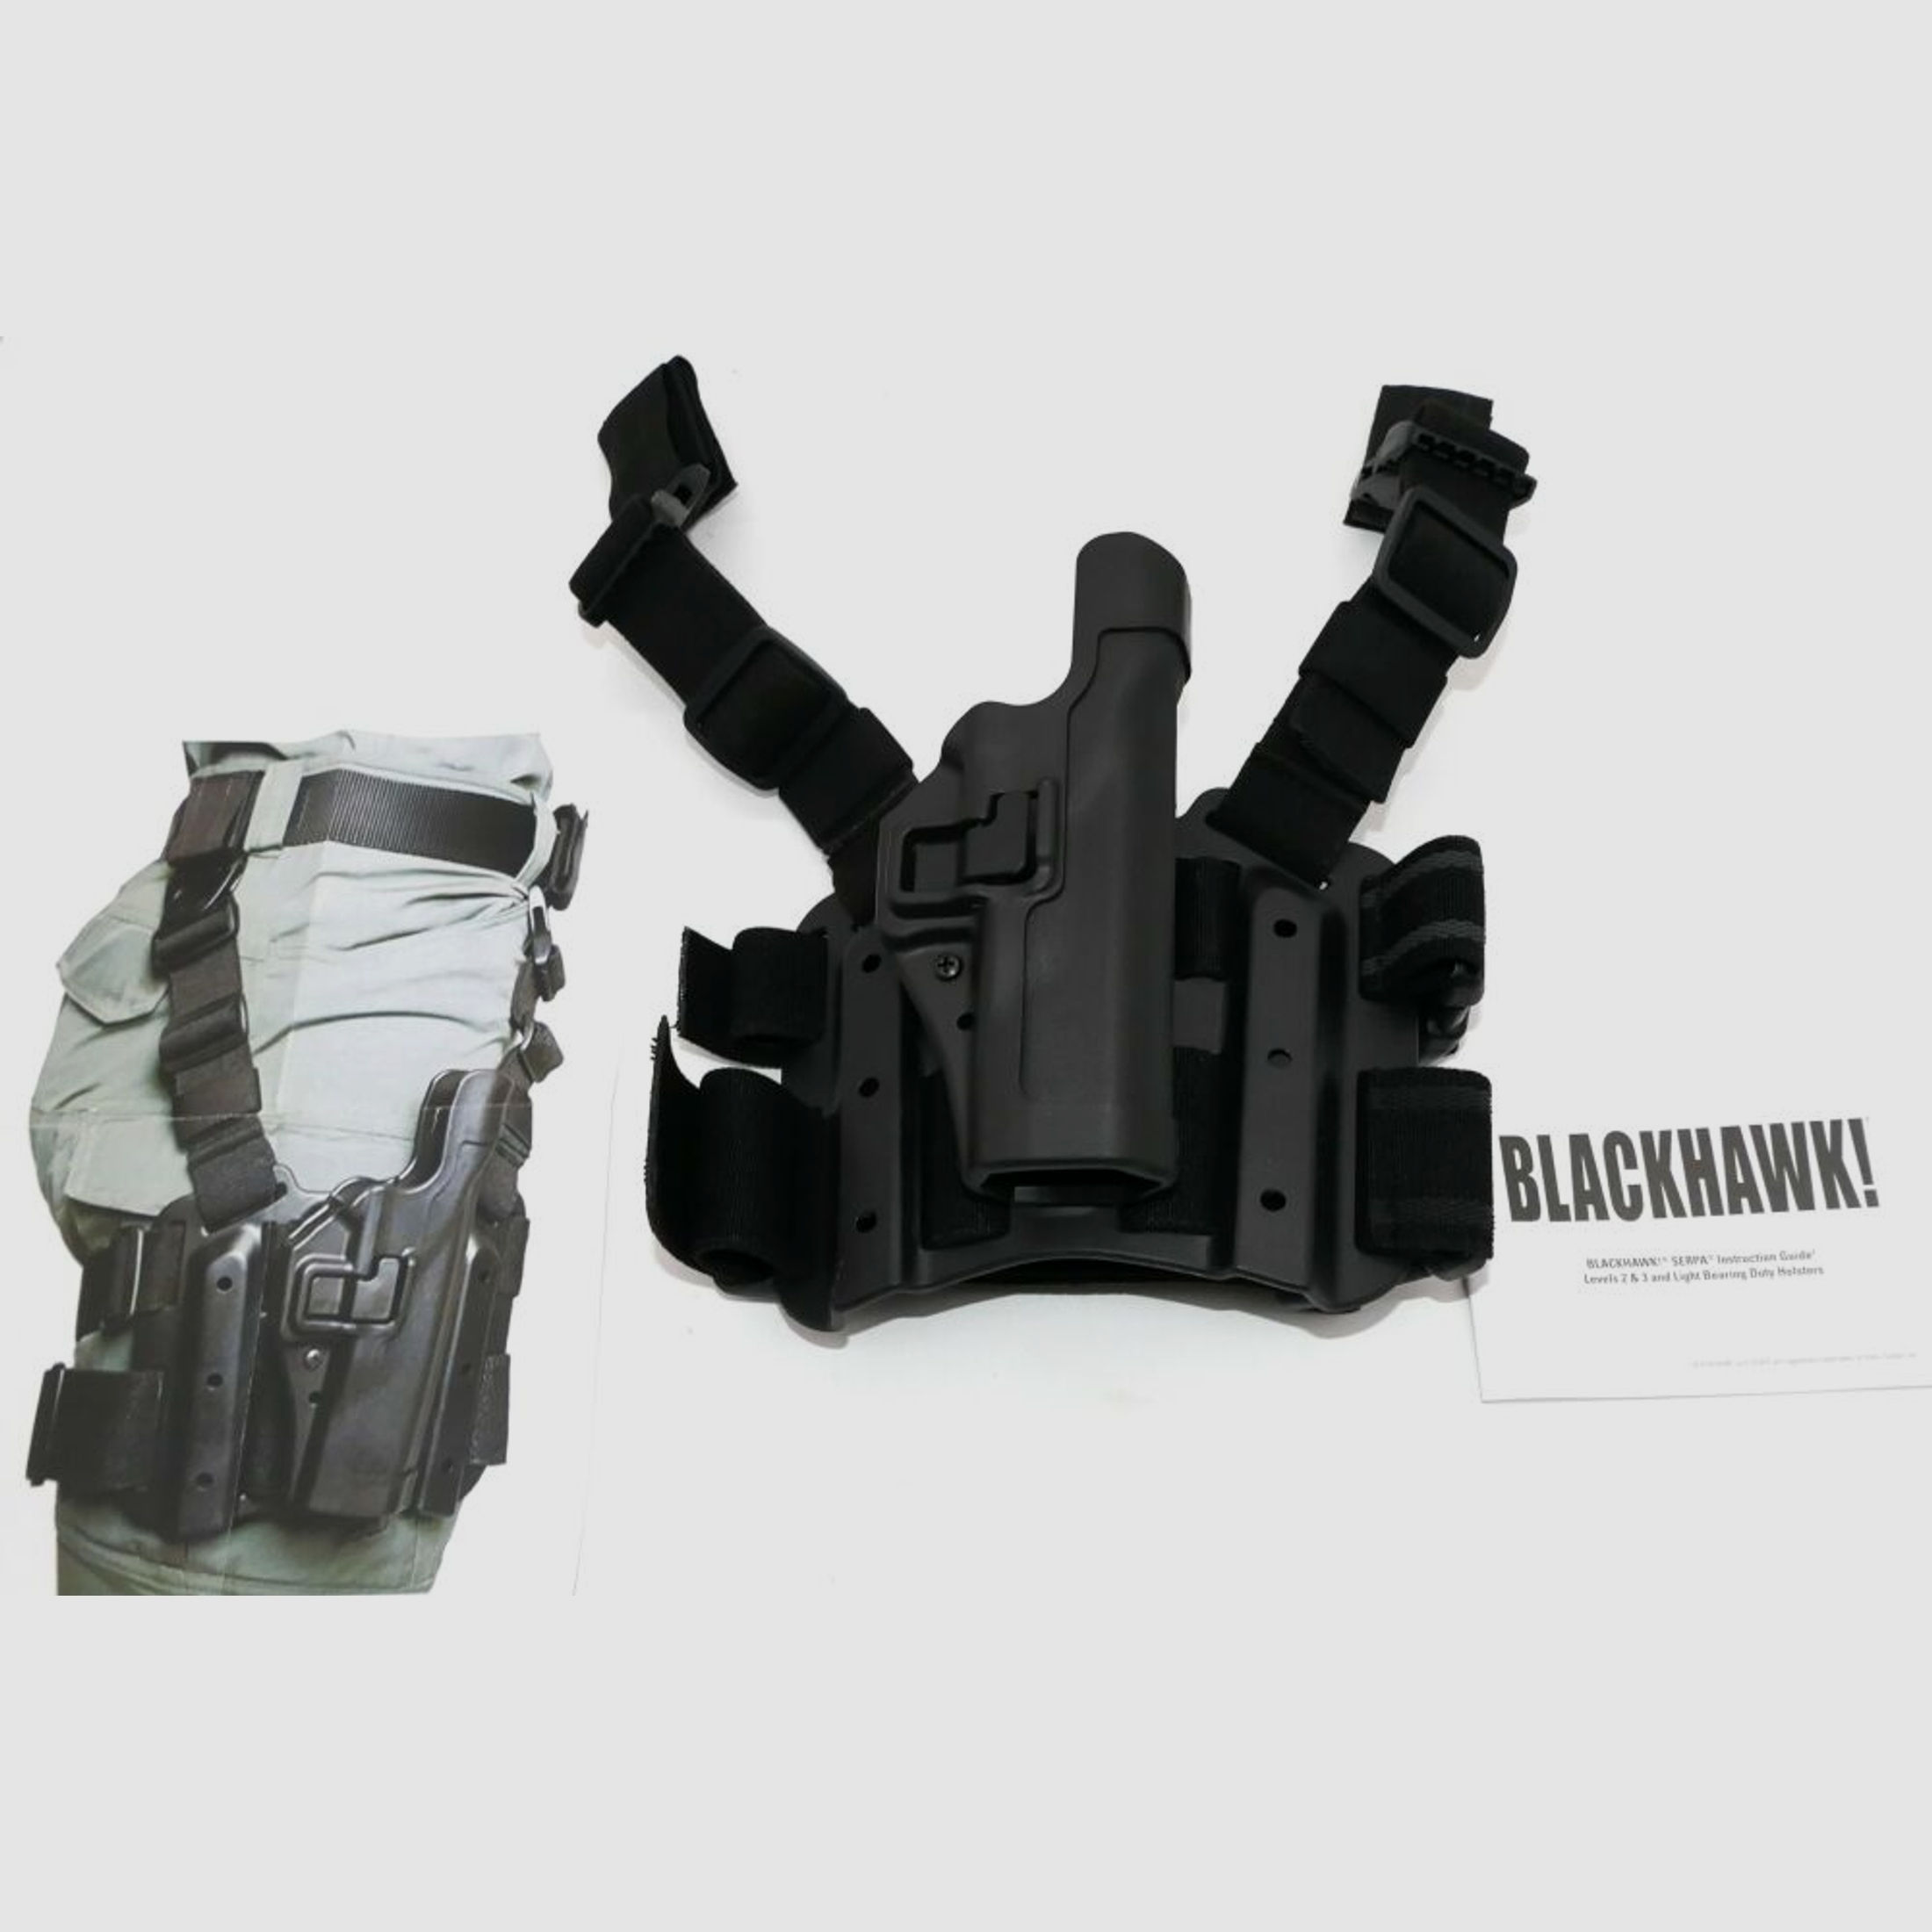 Blackhawk	 Blackhawk Glock Tactical Sepra Holster 17, 22, 19, 23, 31, 32 Rechts / Right